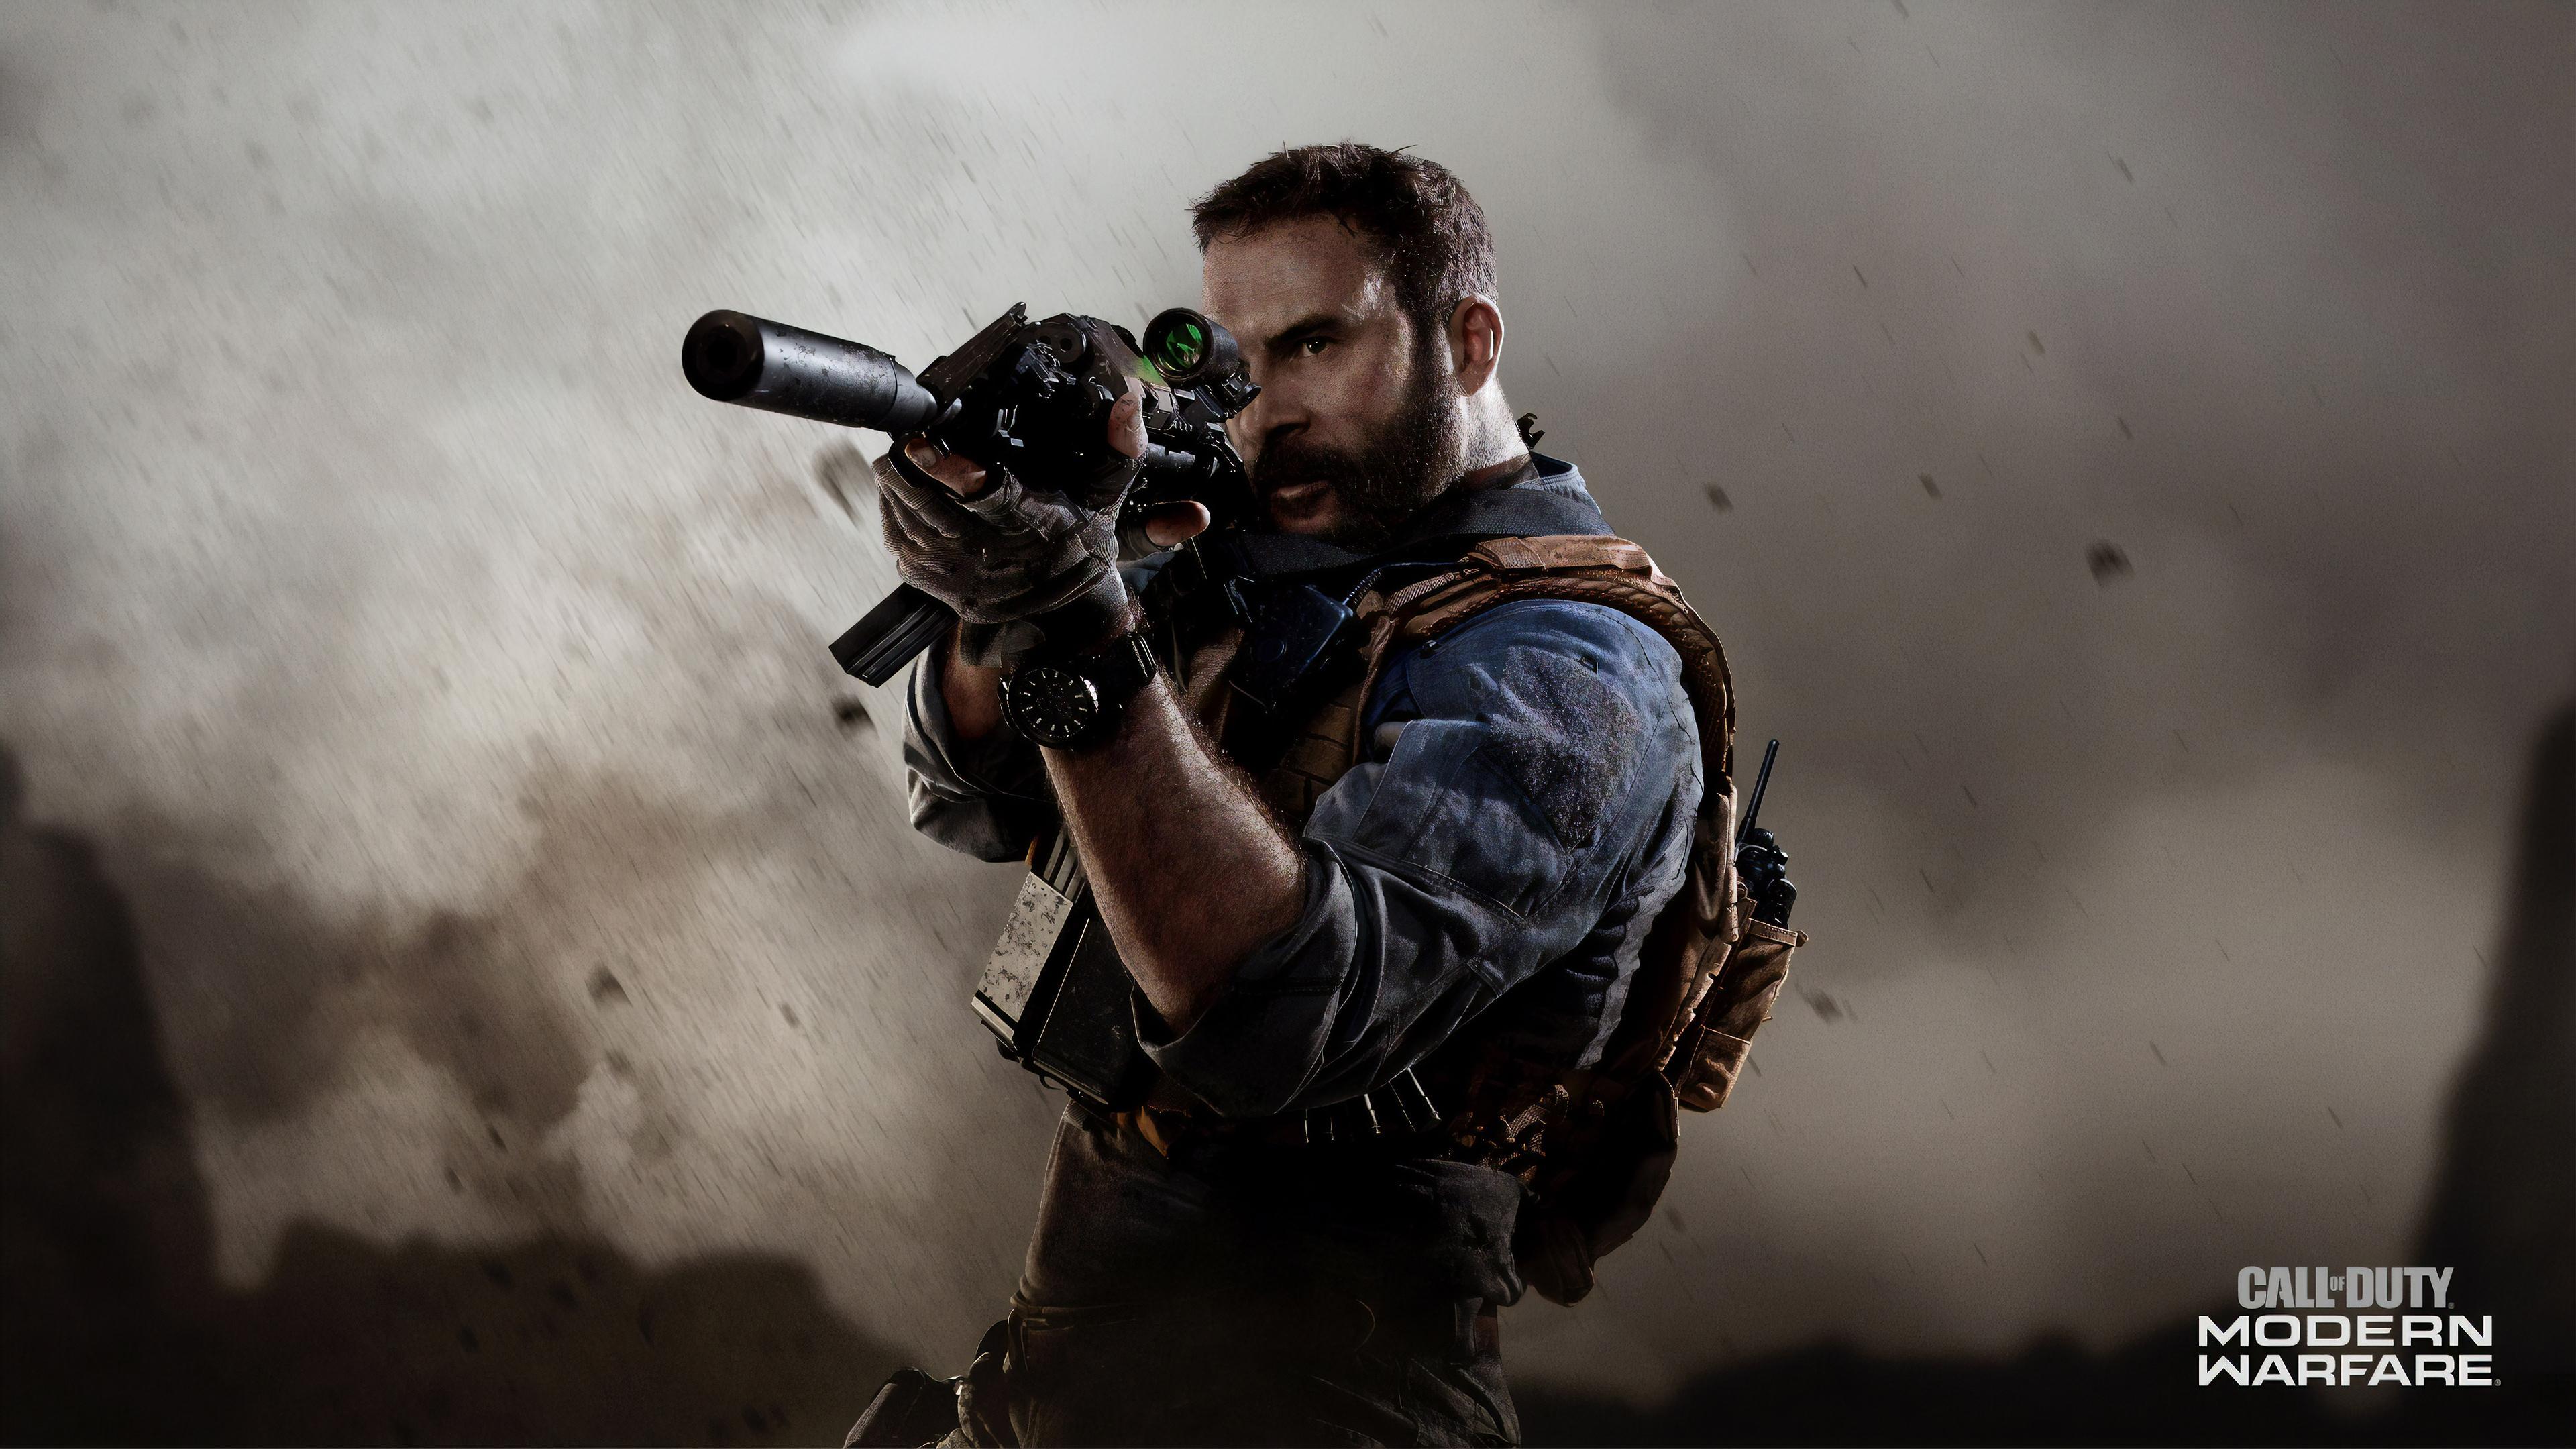 Call Of Duty Modern Warfare 4k, HD Games, 4k Wallpapers, Image